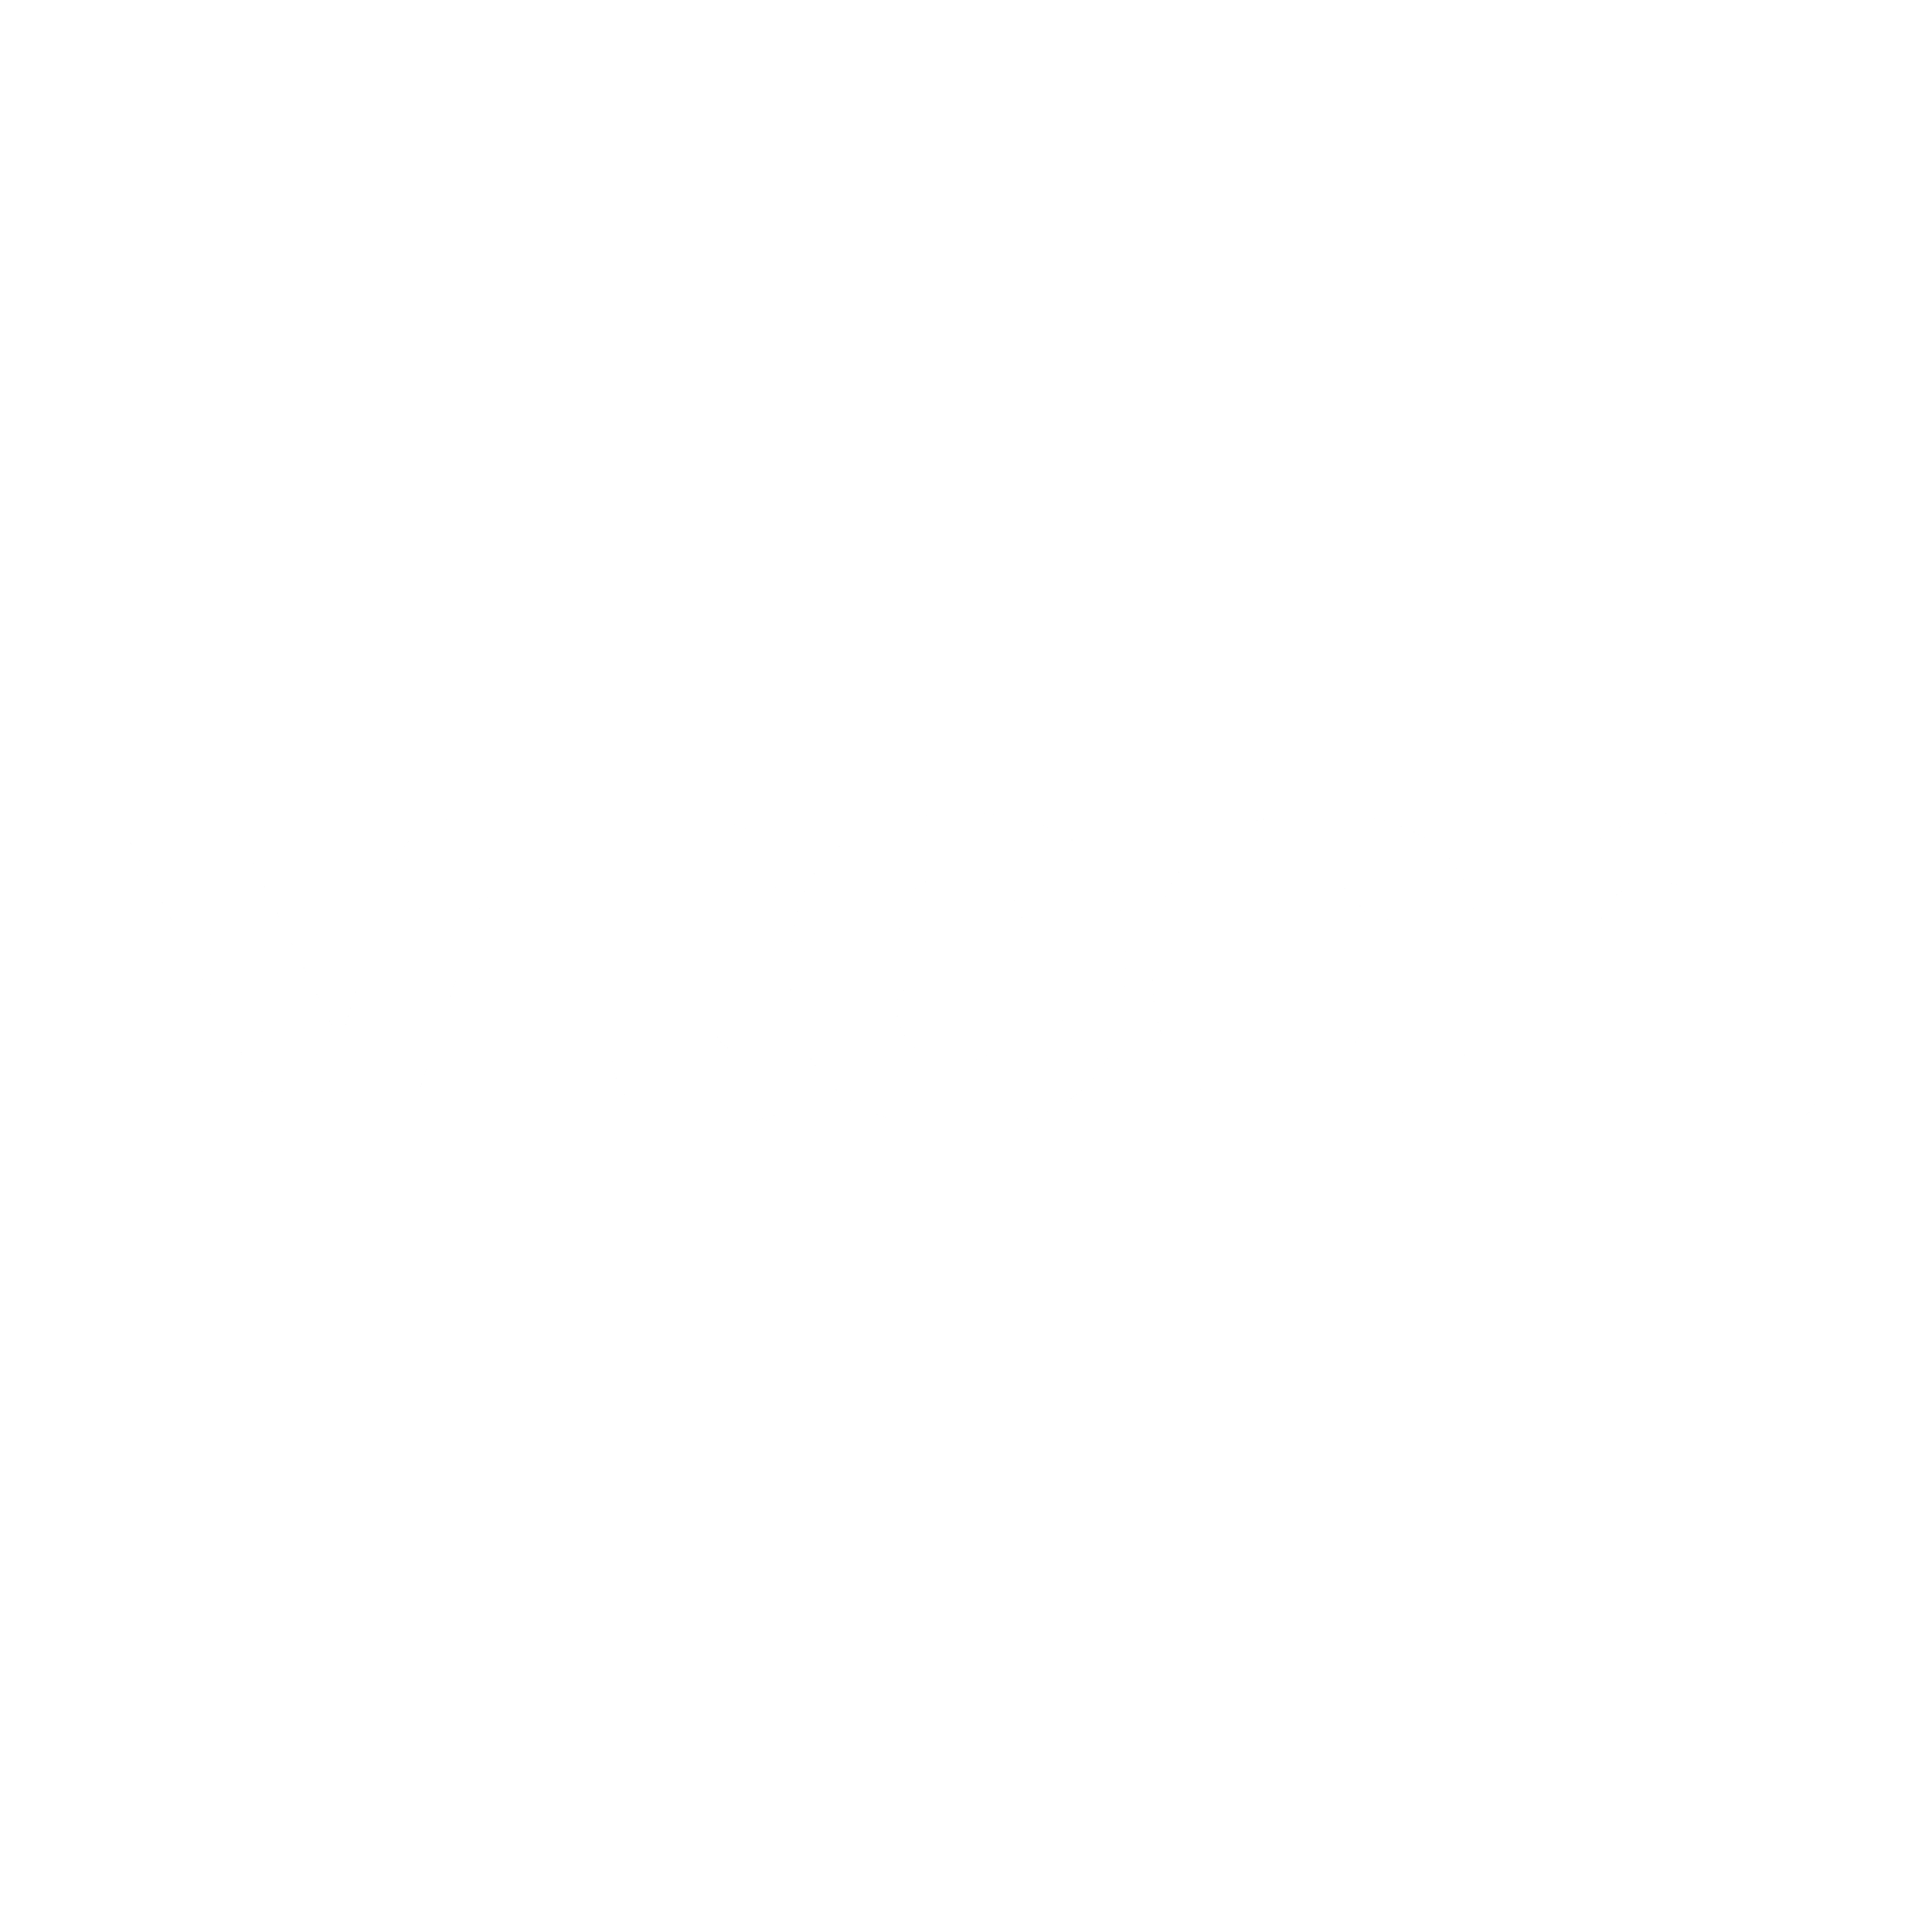 VTech Logo - VTech Logo PNG Transparent & SVG Vector - Freebie Supply